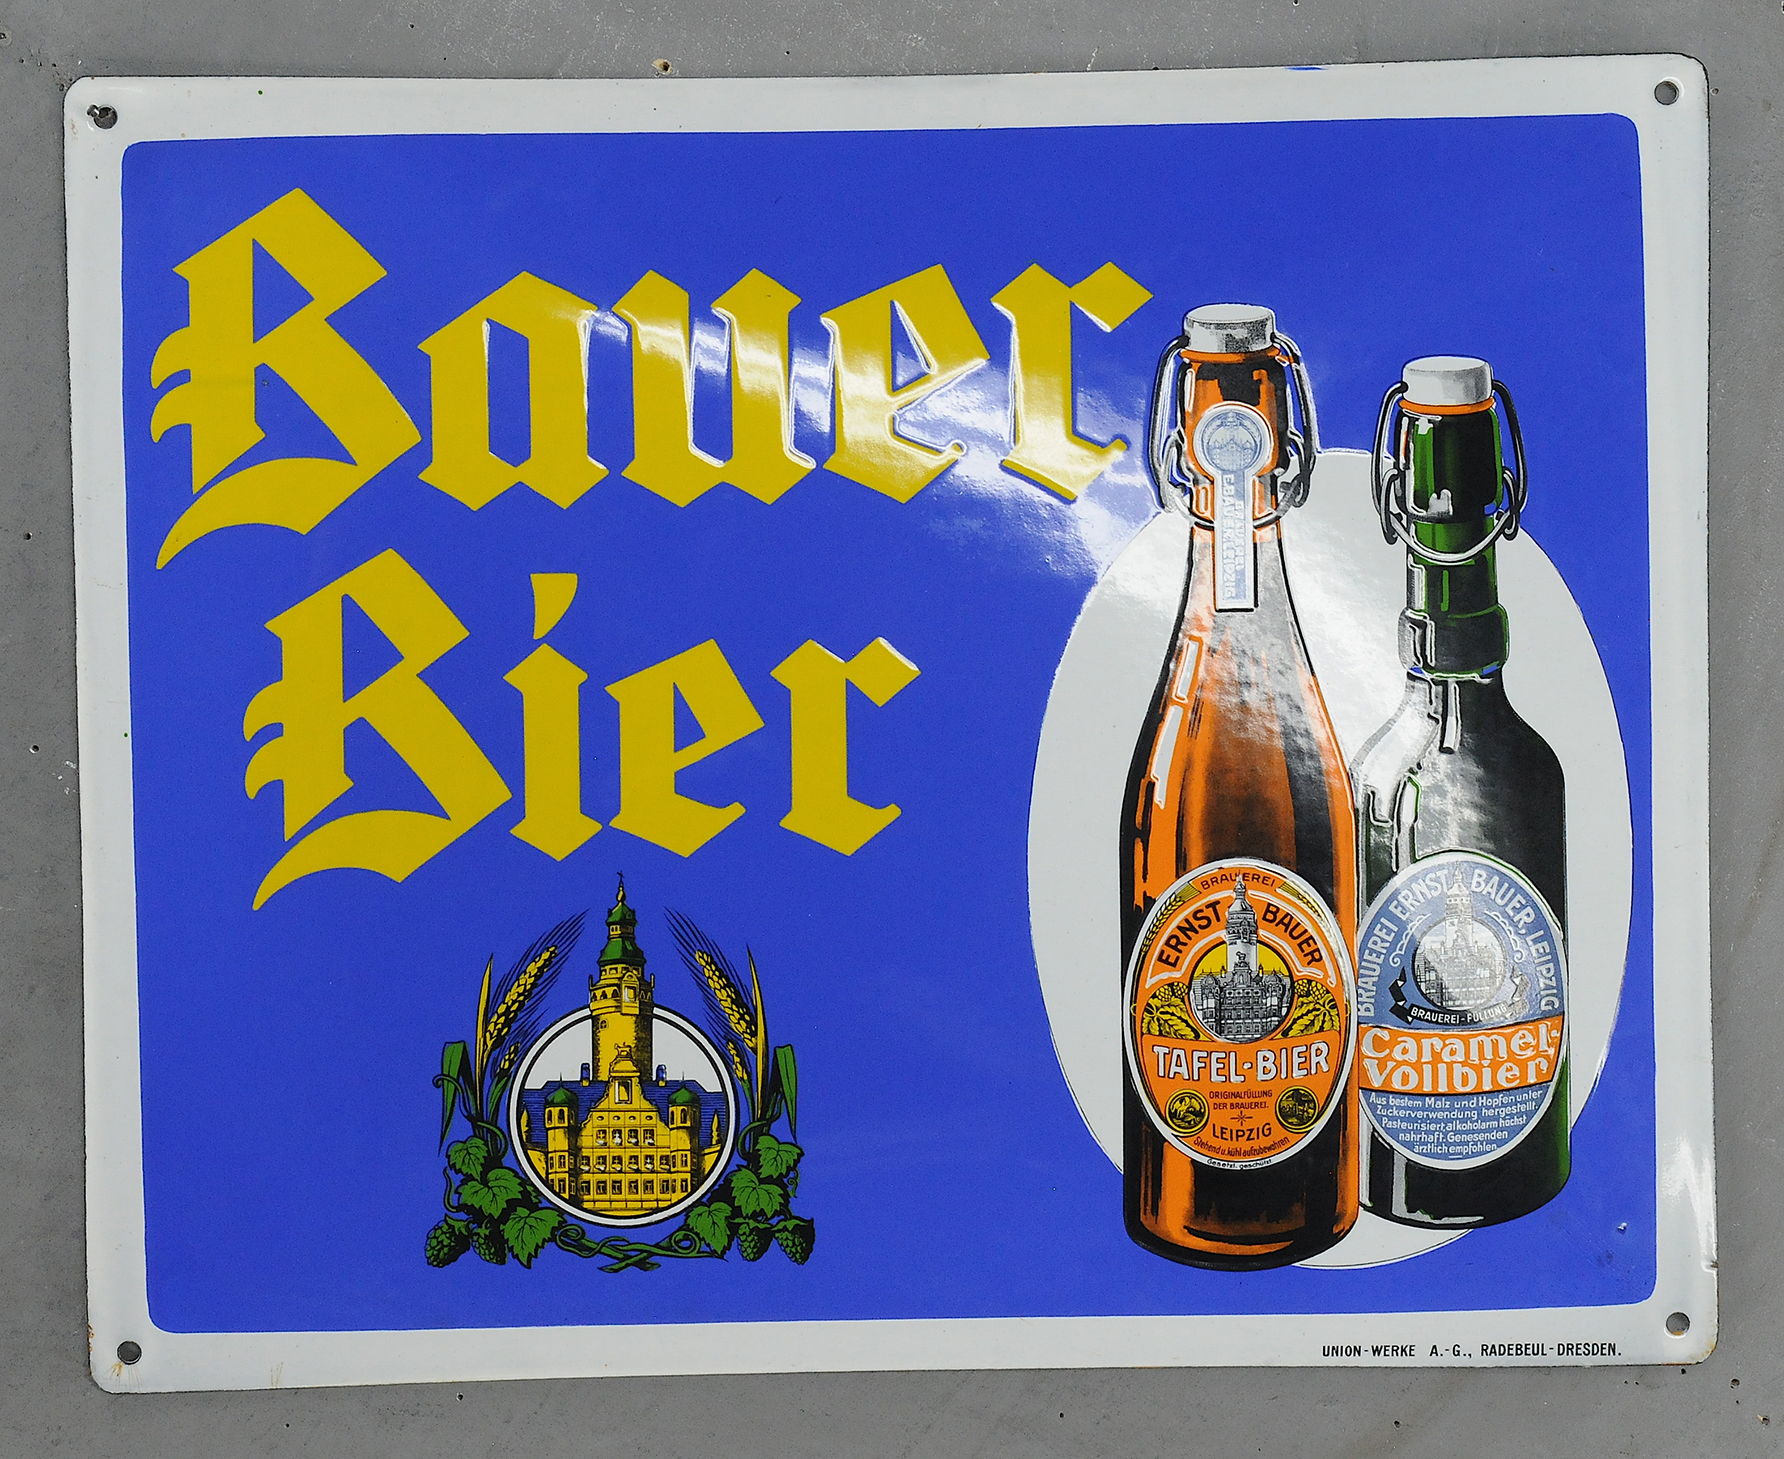 Bauer Bier - Image 3 of 3